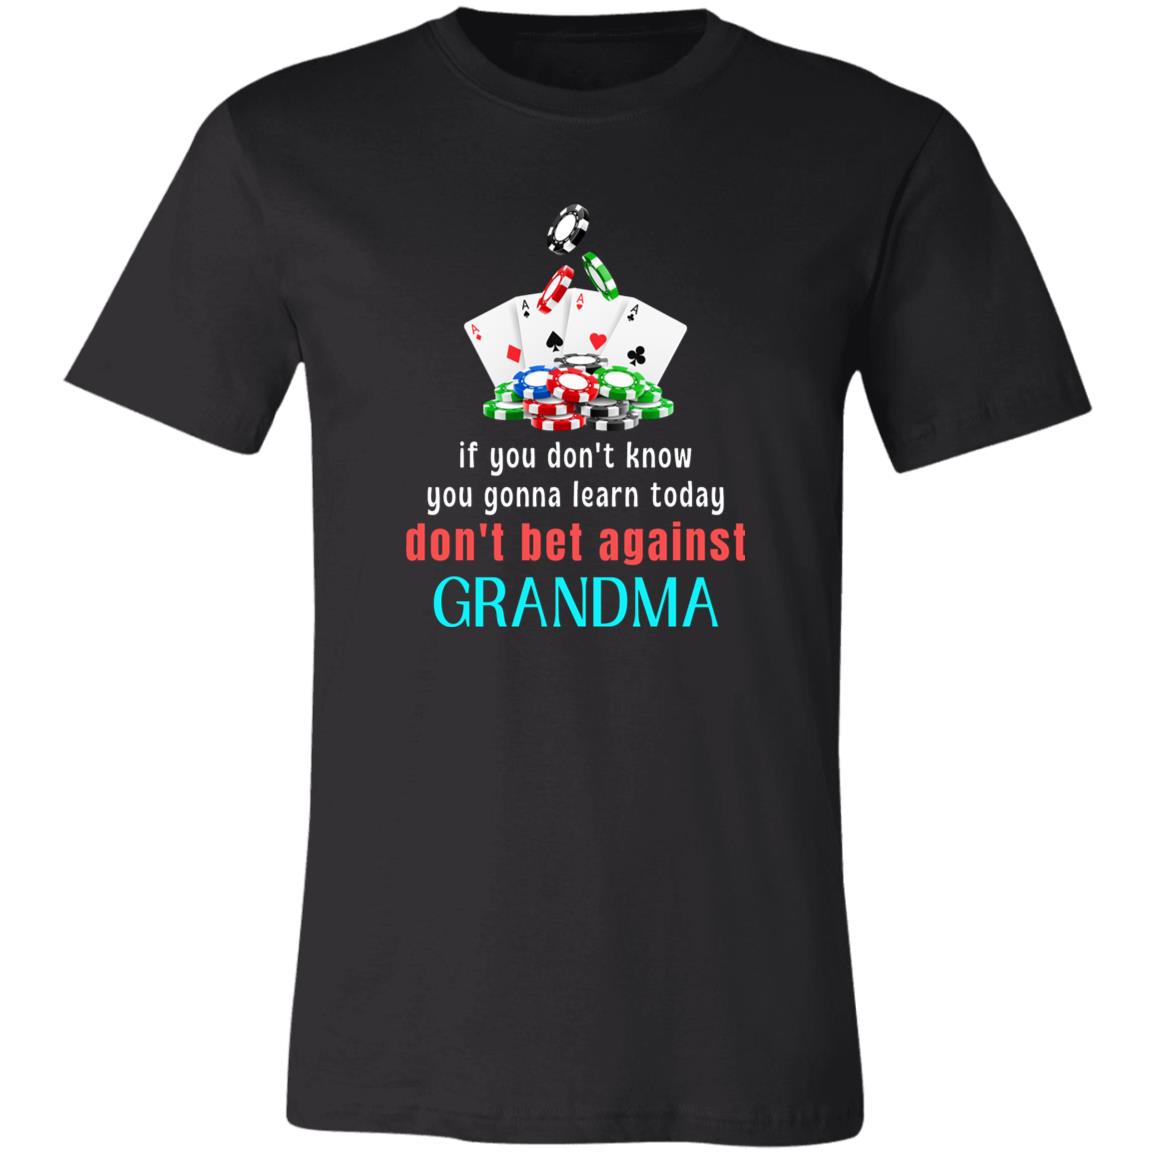 Don't Mess With Grandma | Unisex Jersey Short-Sleeve T-Shirt